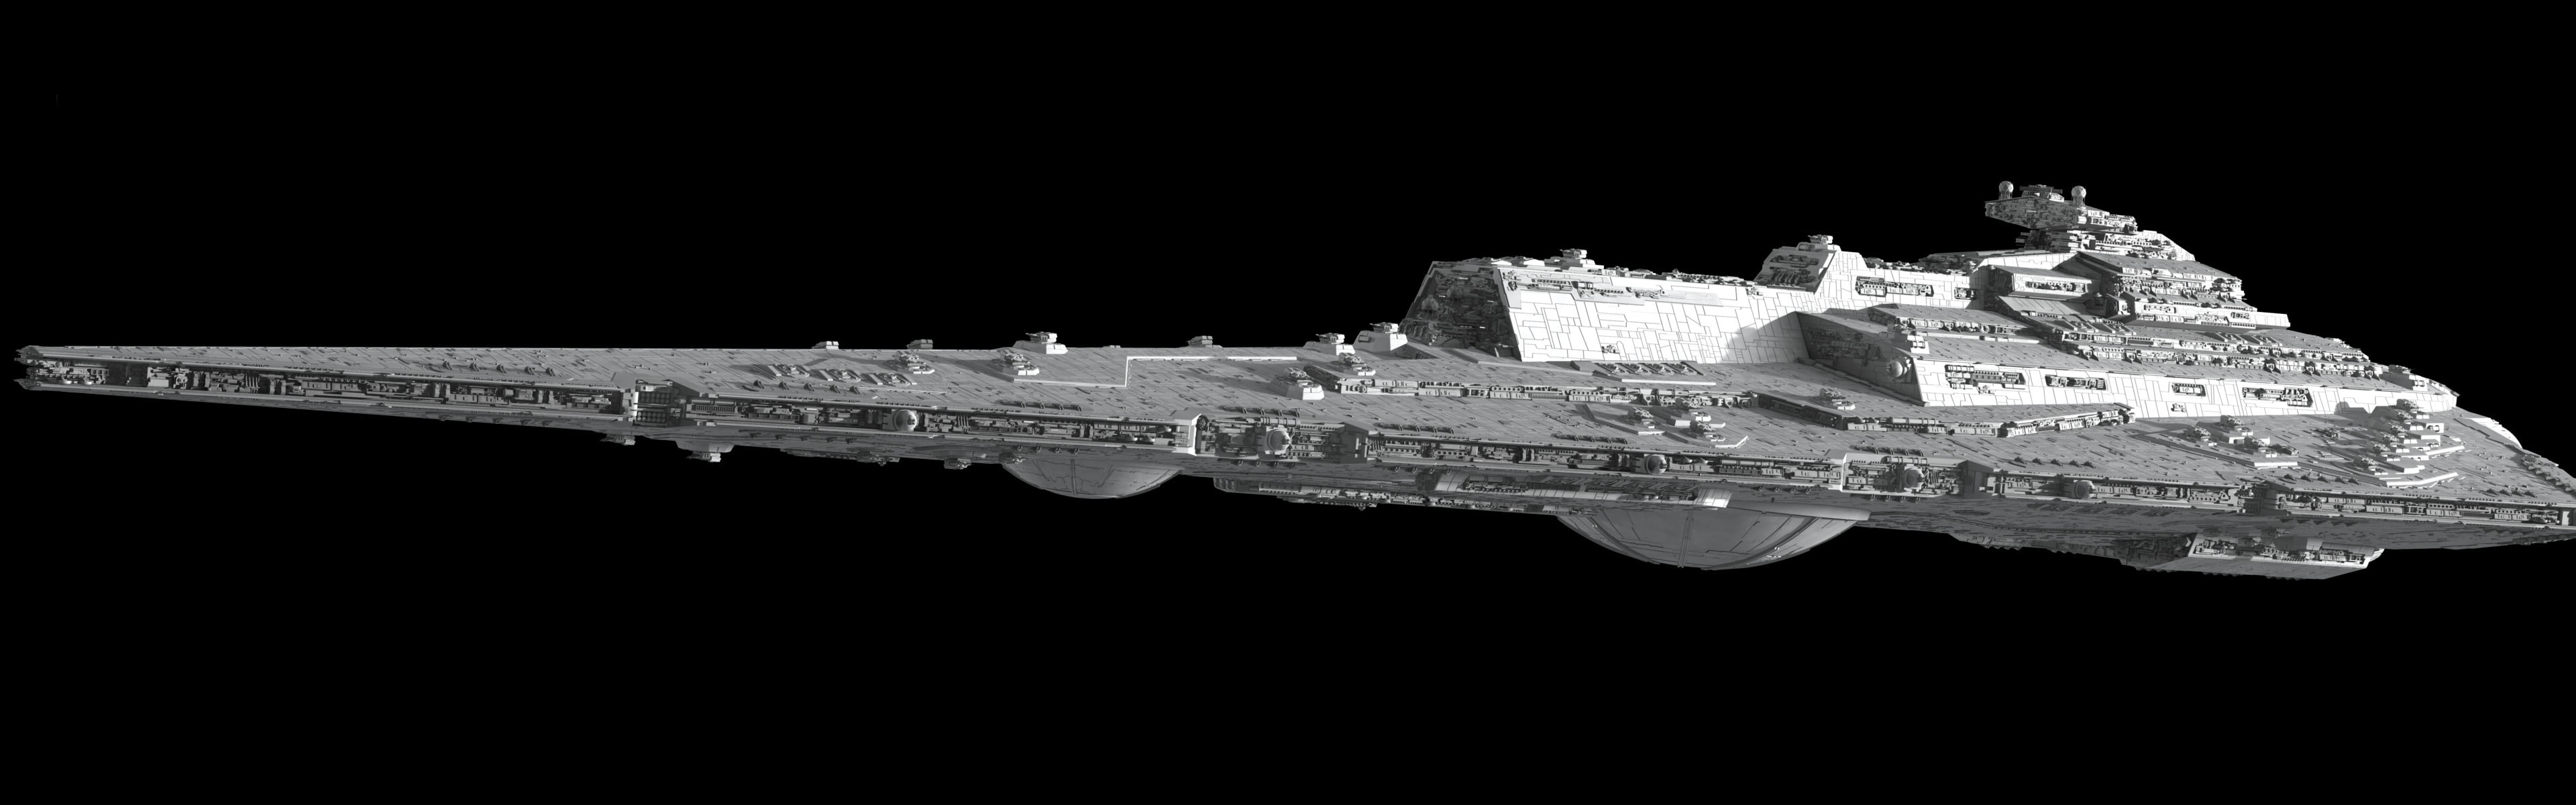 Star Wars Star Destroyer, multiple display, render, CGI, black background